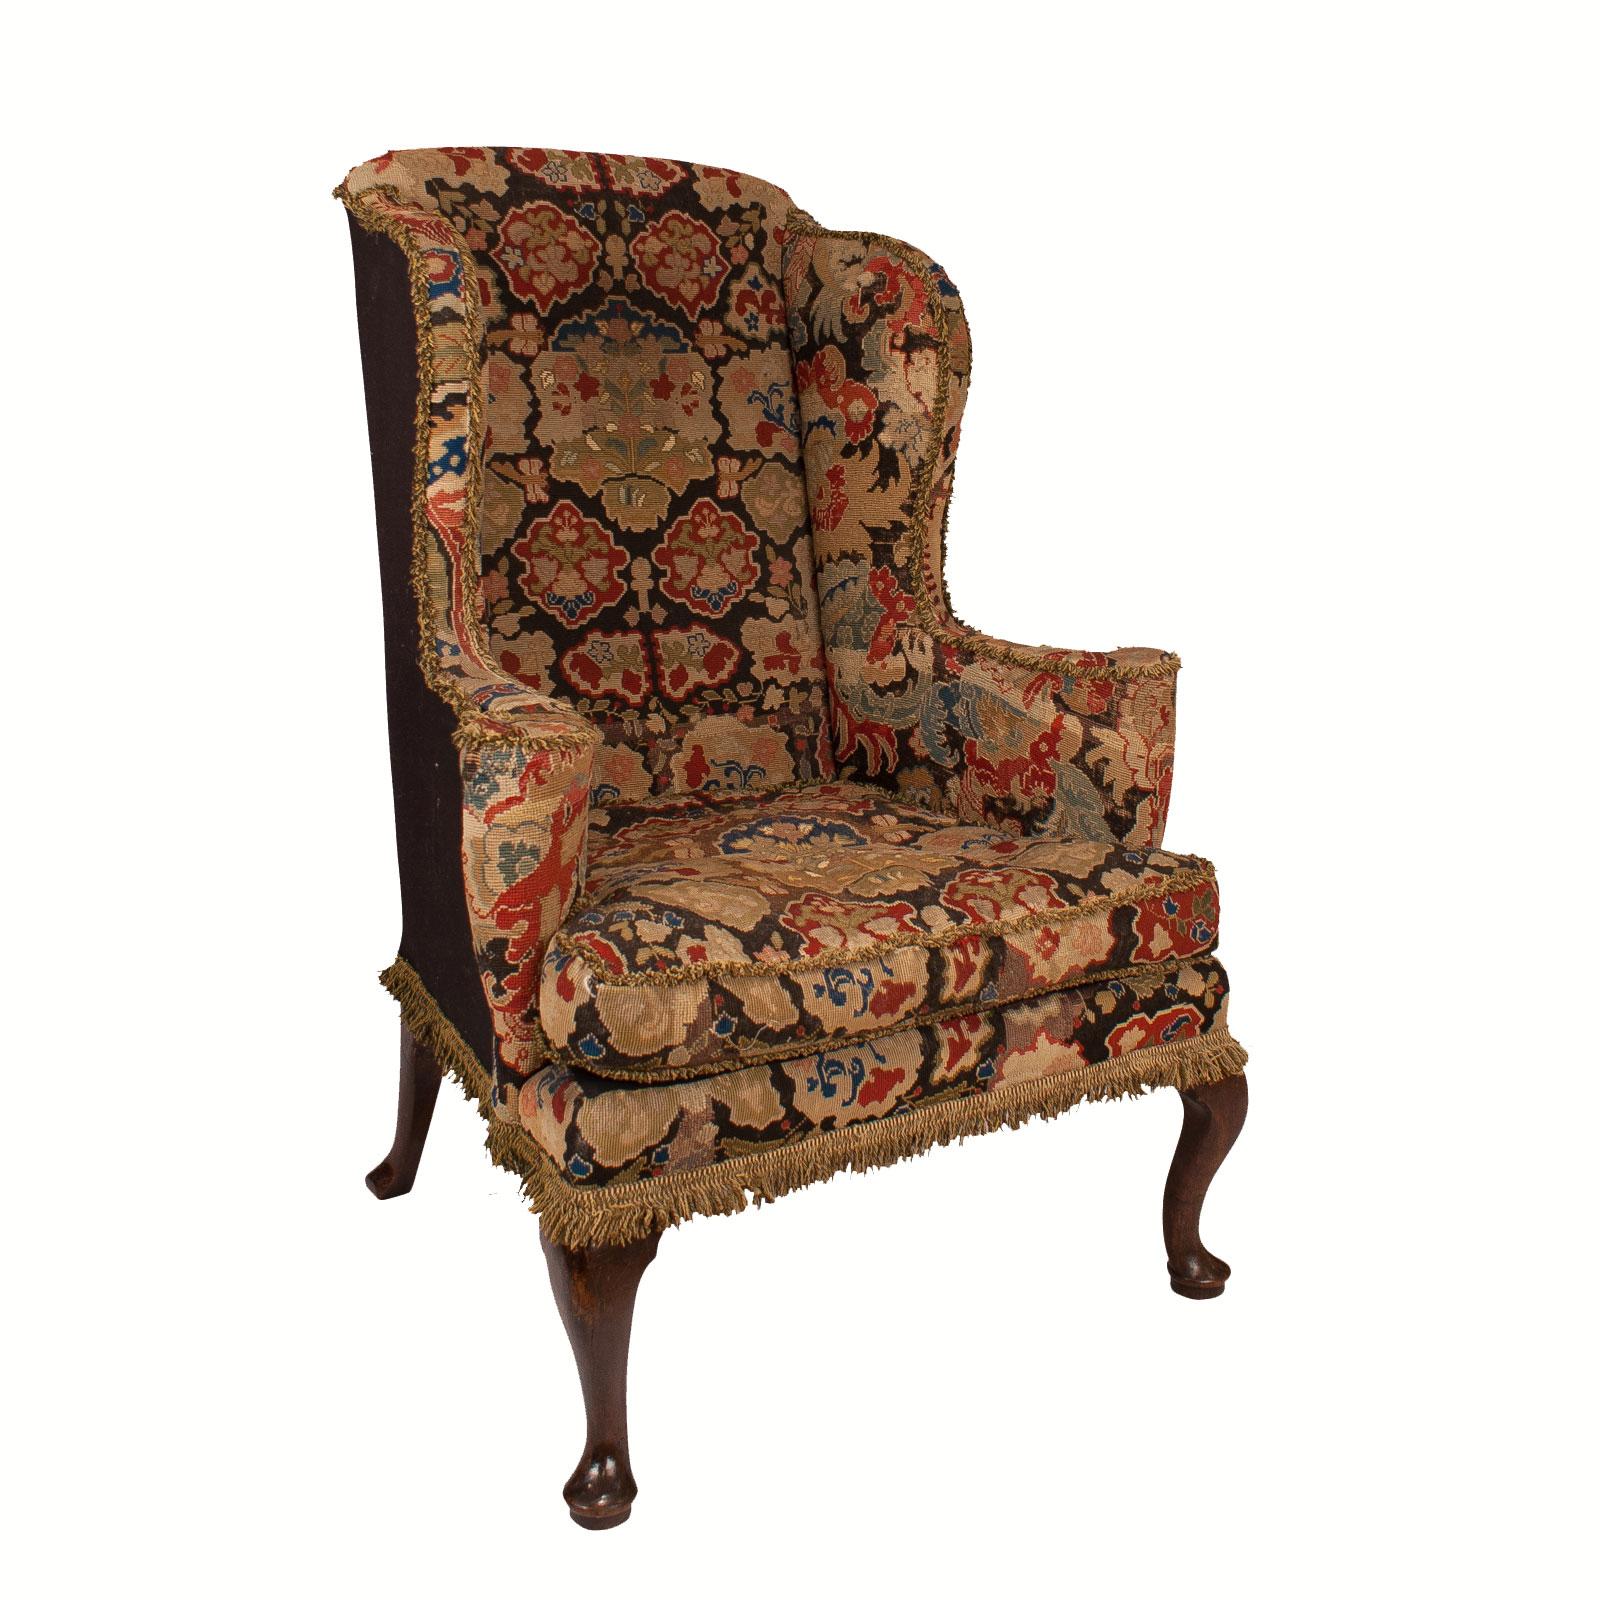 George II Wing Chair, England, circa 1750 (George II.)